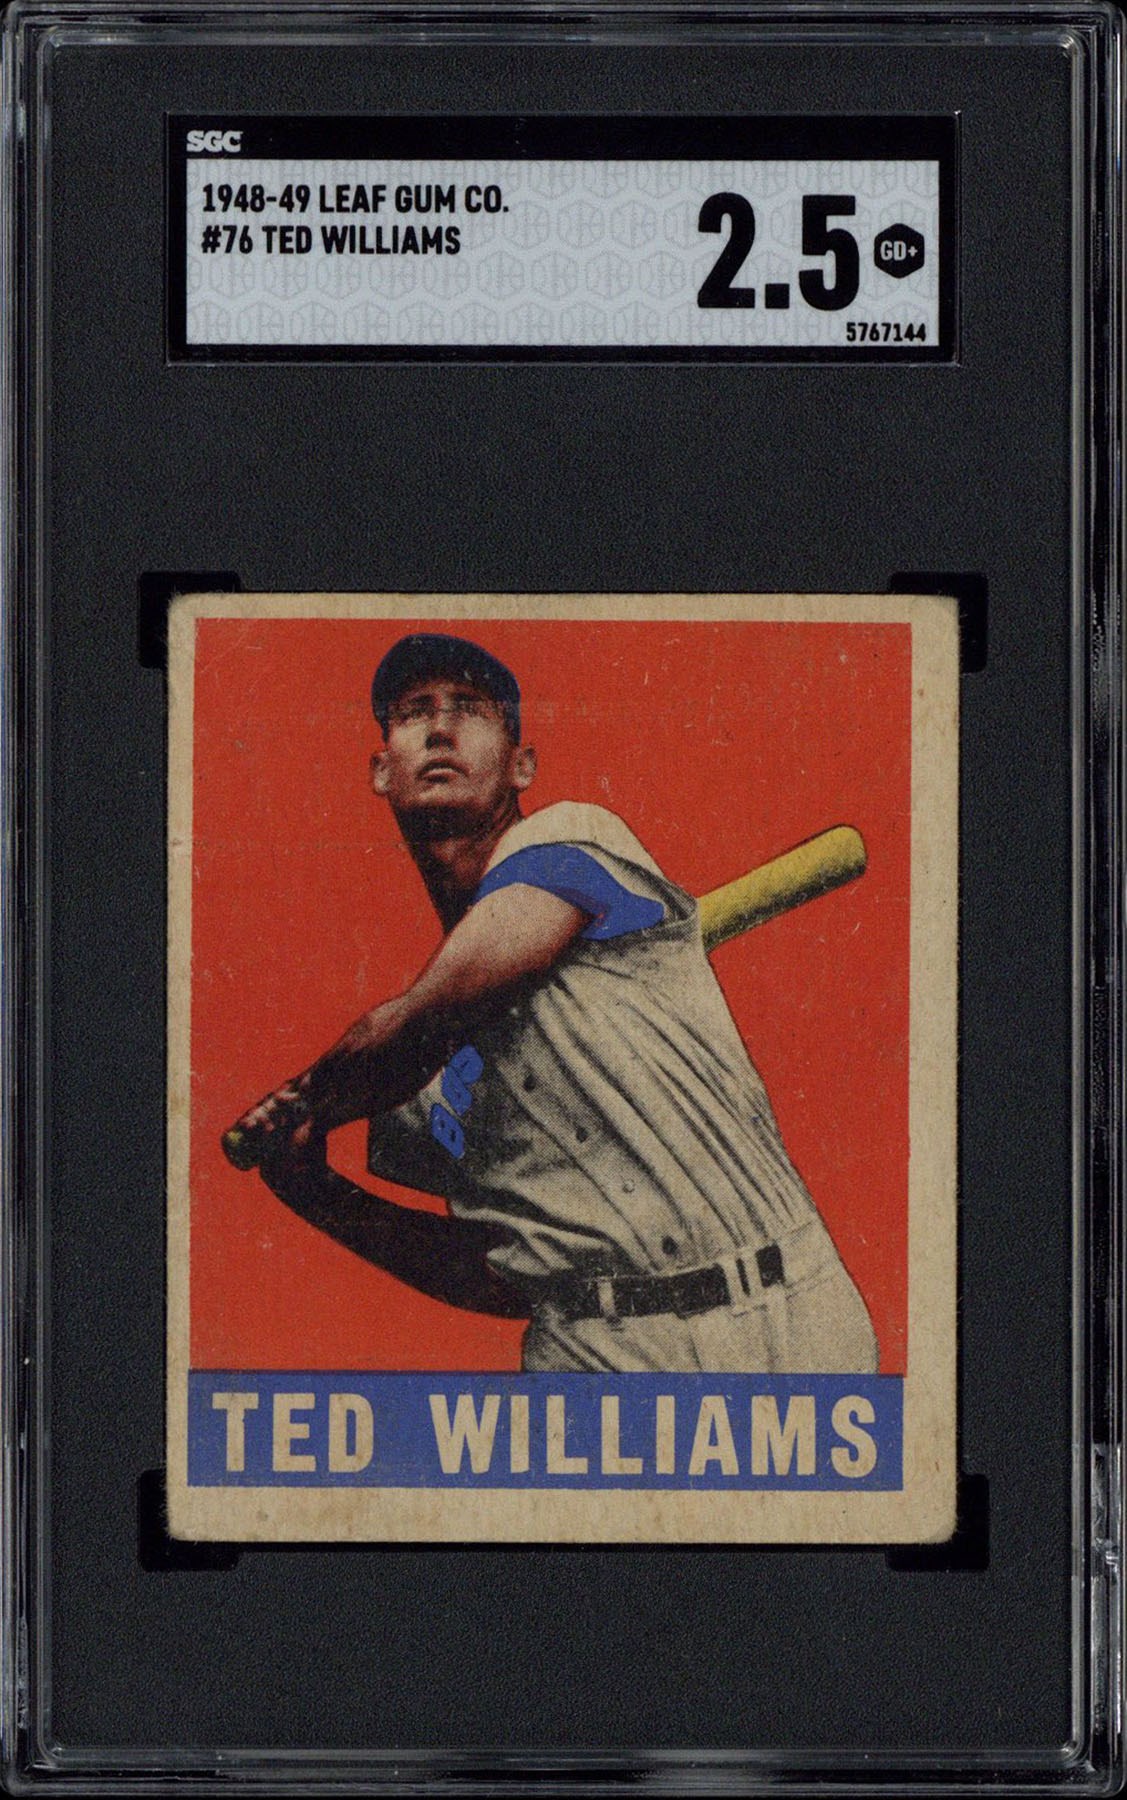 1948-49 Leaf #76 Ted Williams (HOF) - SGC GD 2.5+